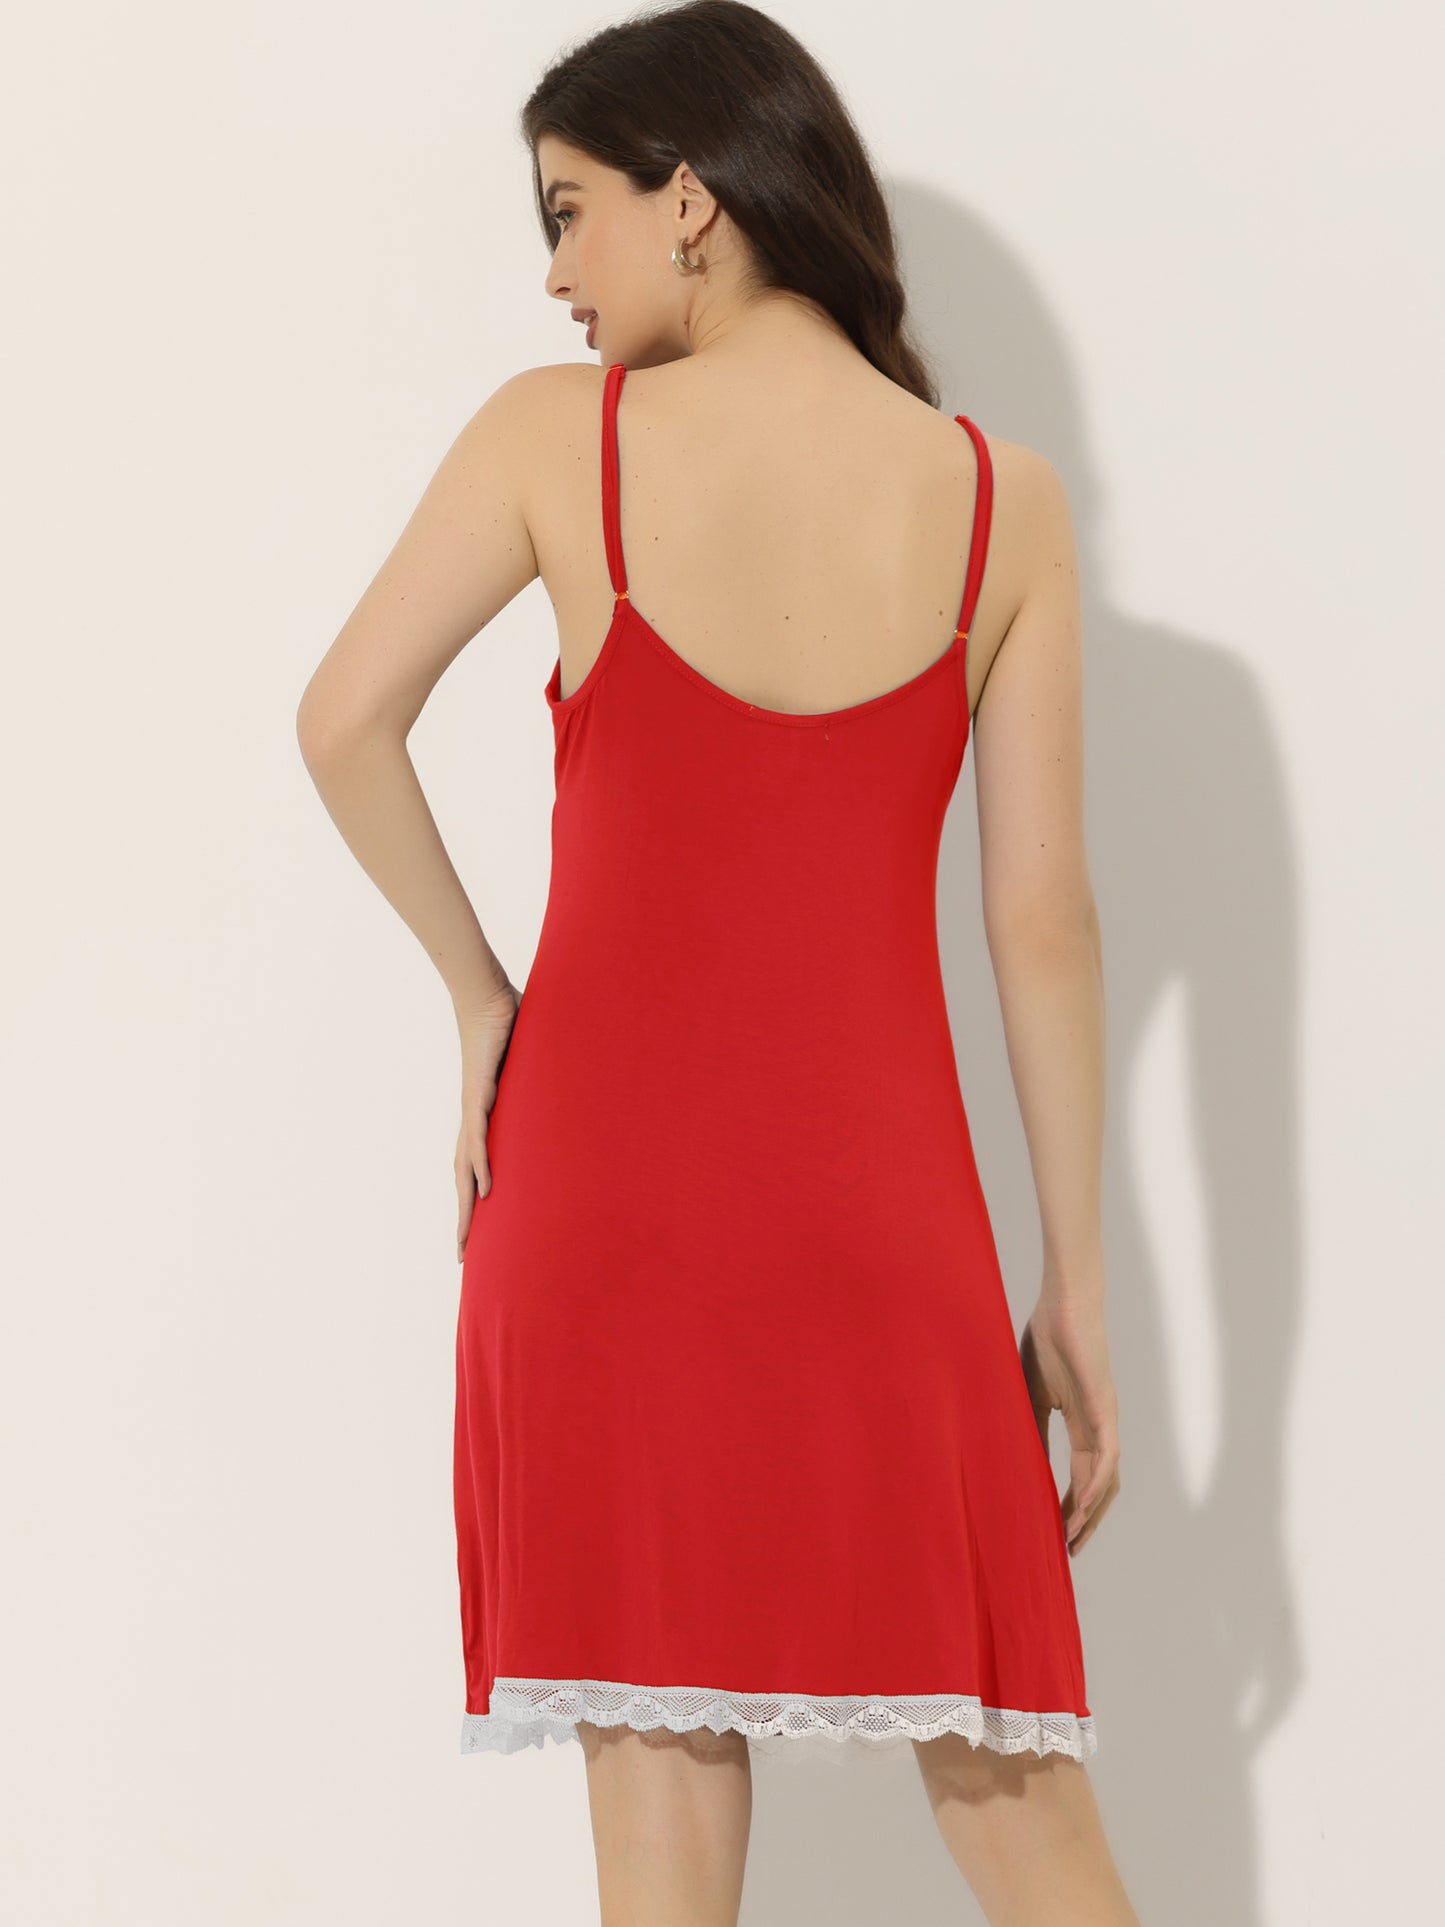 cheibear Pajama V Neck Lace Nightdress Stretchy Lounge Dress Dark Red